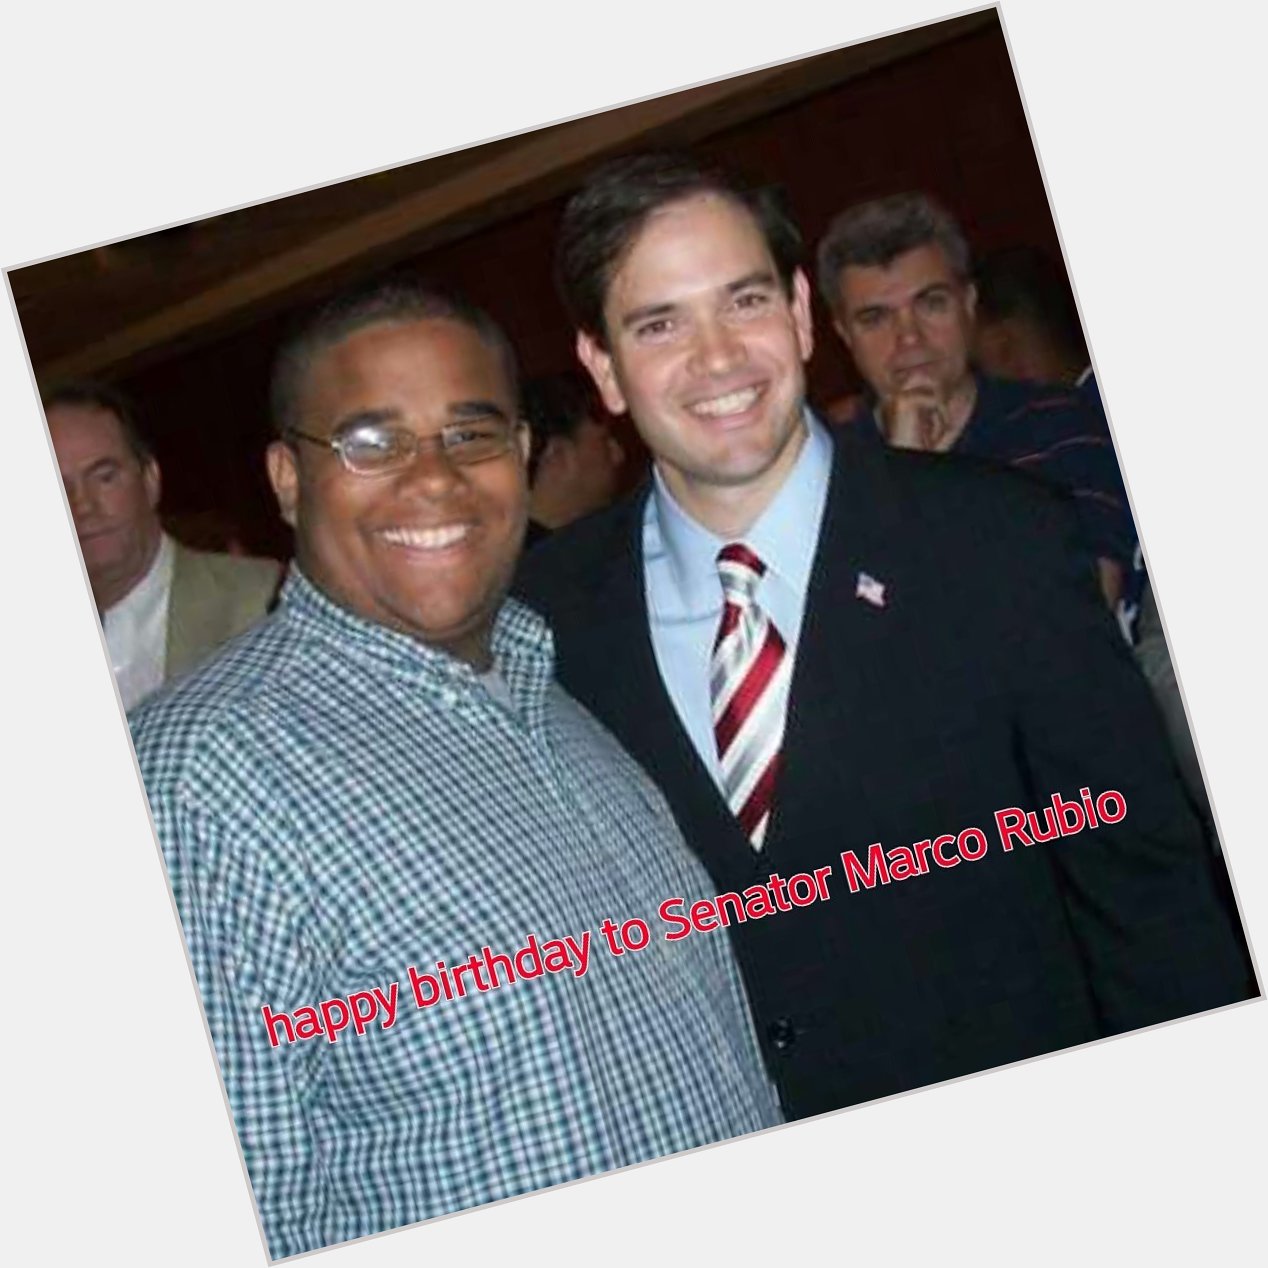 Happy birthday to my good friend Senator Marco Rubio 